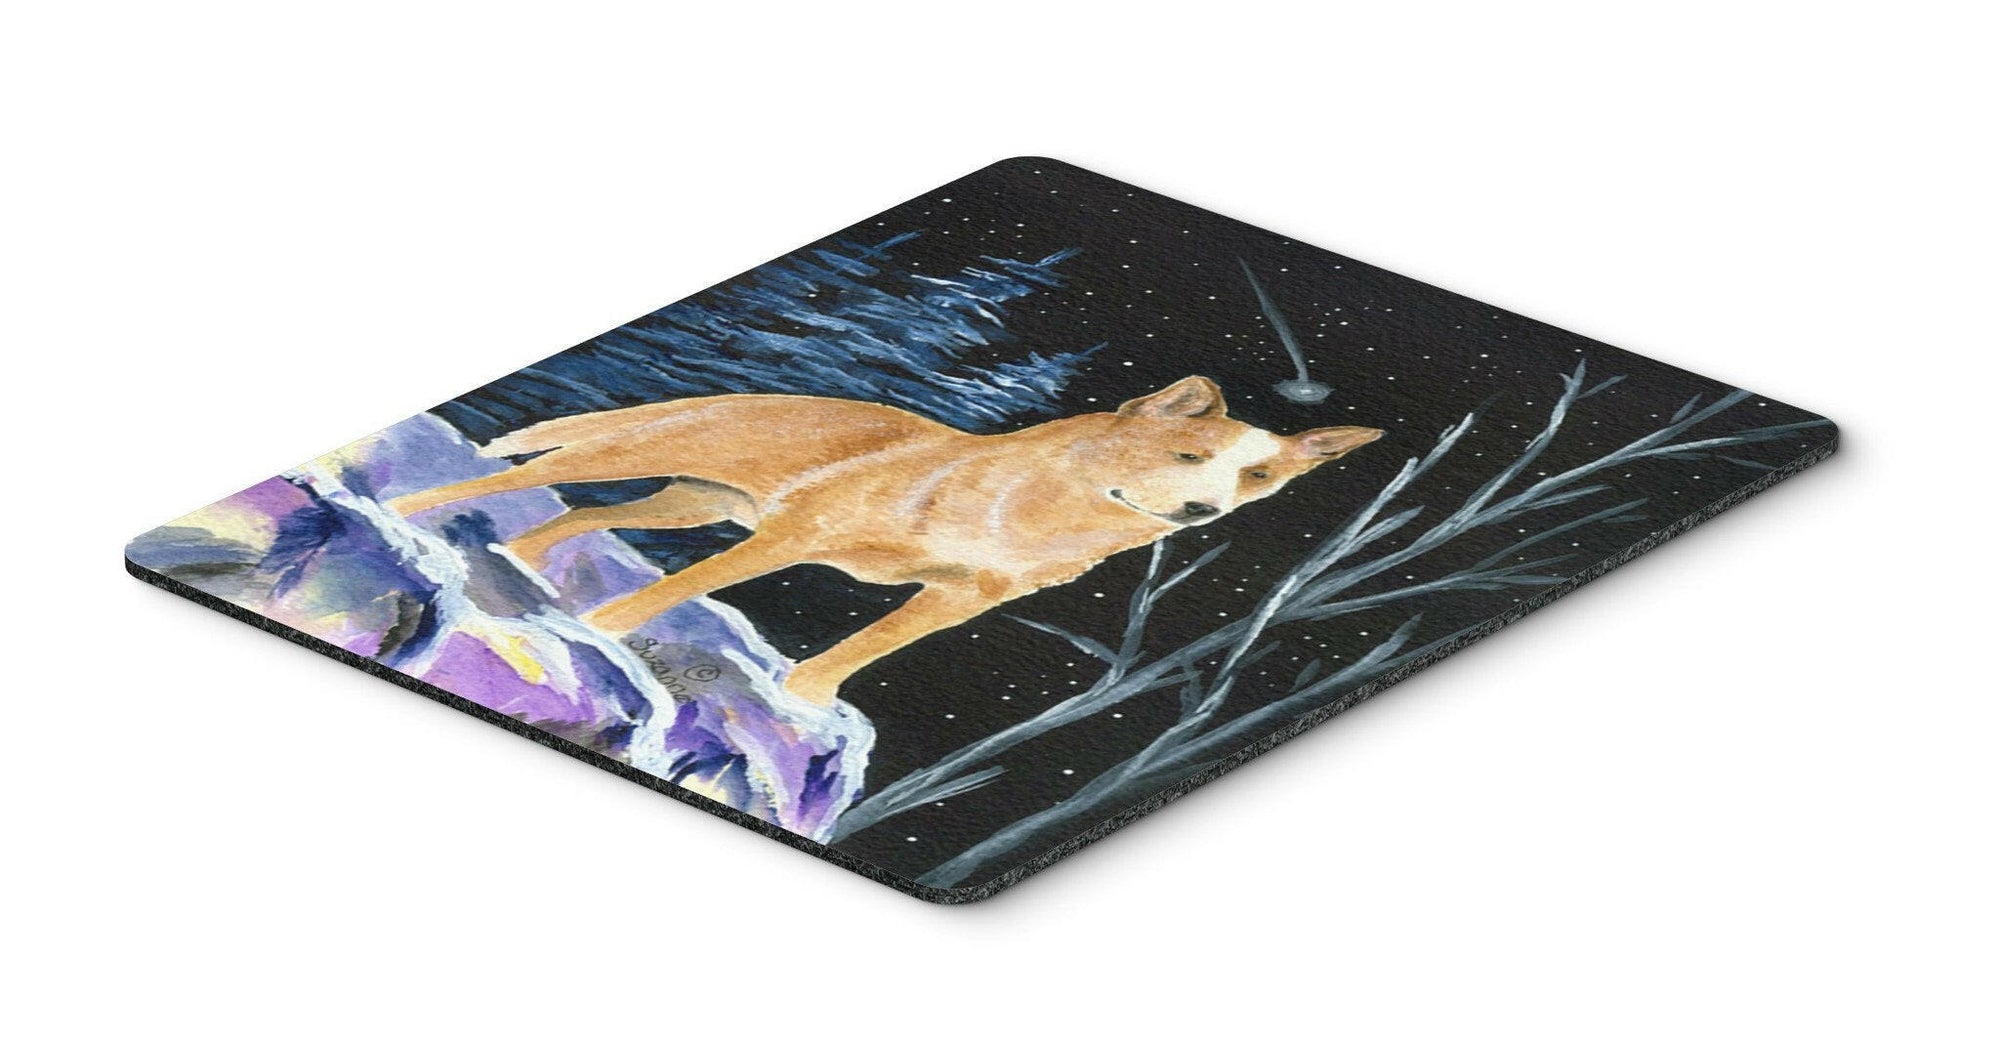 Starry Night Australian Cattle Dog Mouse Pad / Hot Pad / Trivet by Caroline's Treasures